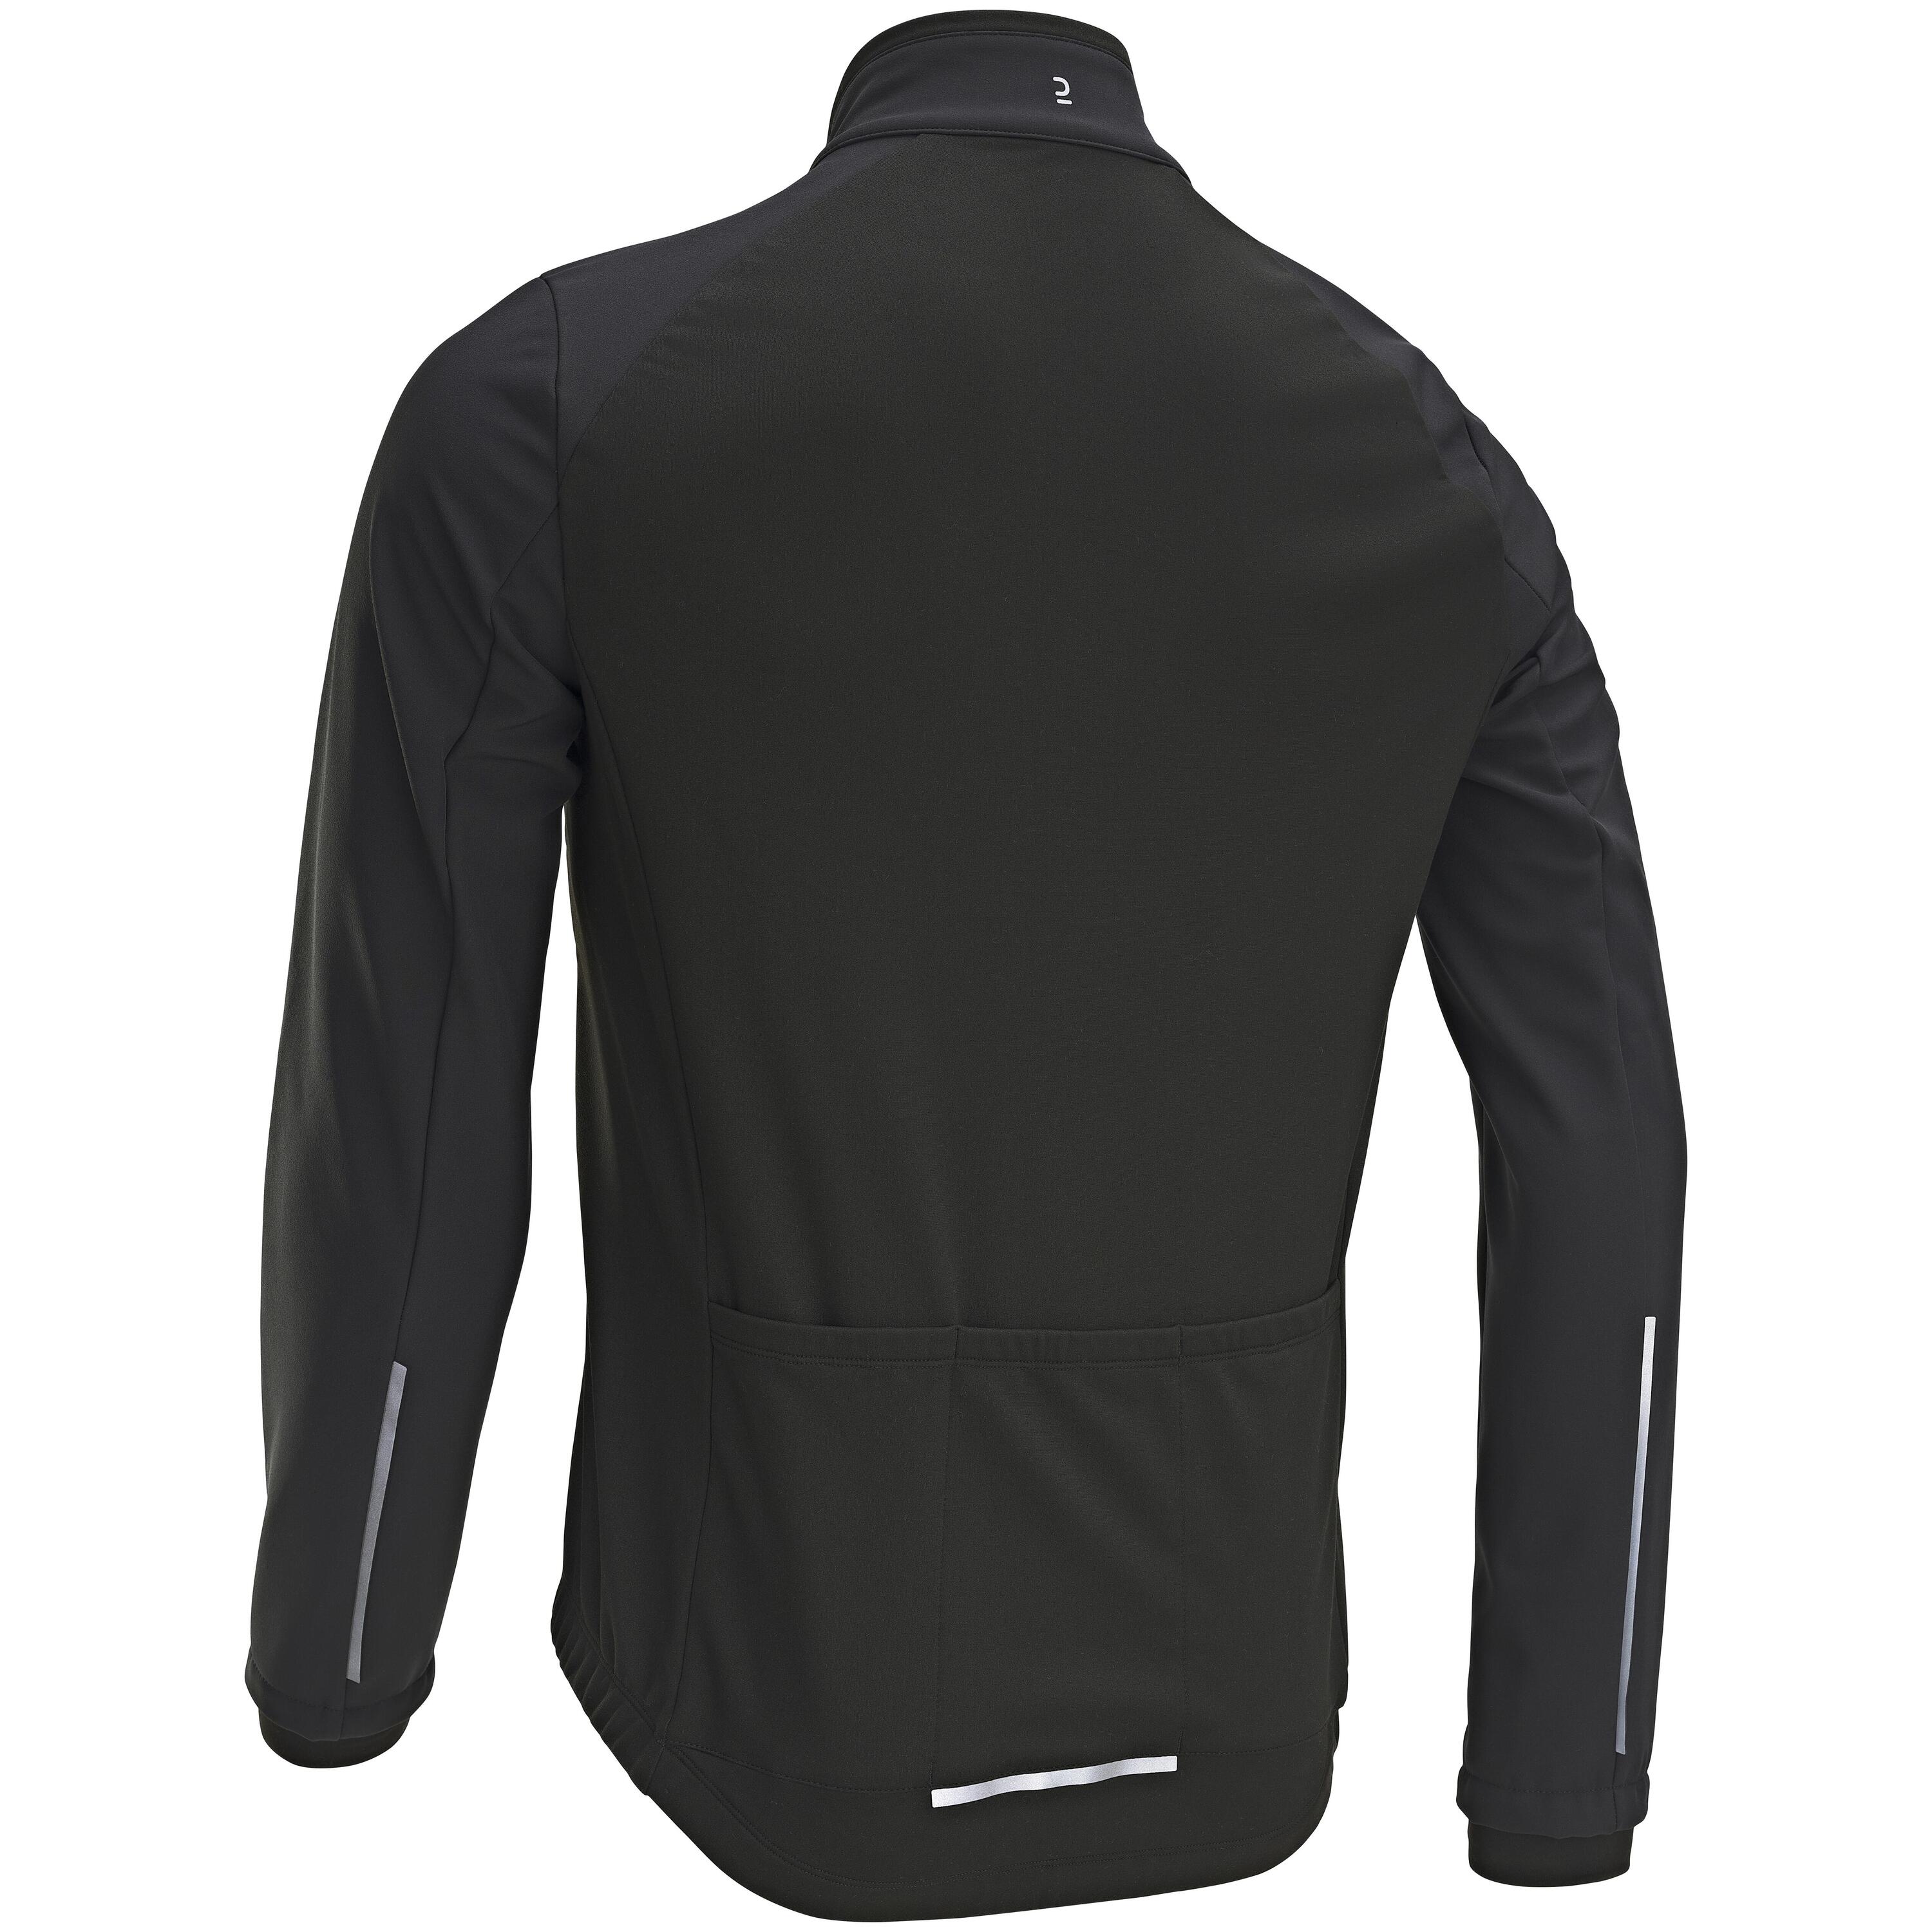 Men's Long-Sleeved Road Cycling Winter Jacket RC100 - Black 2/6